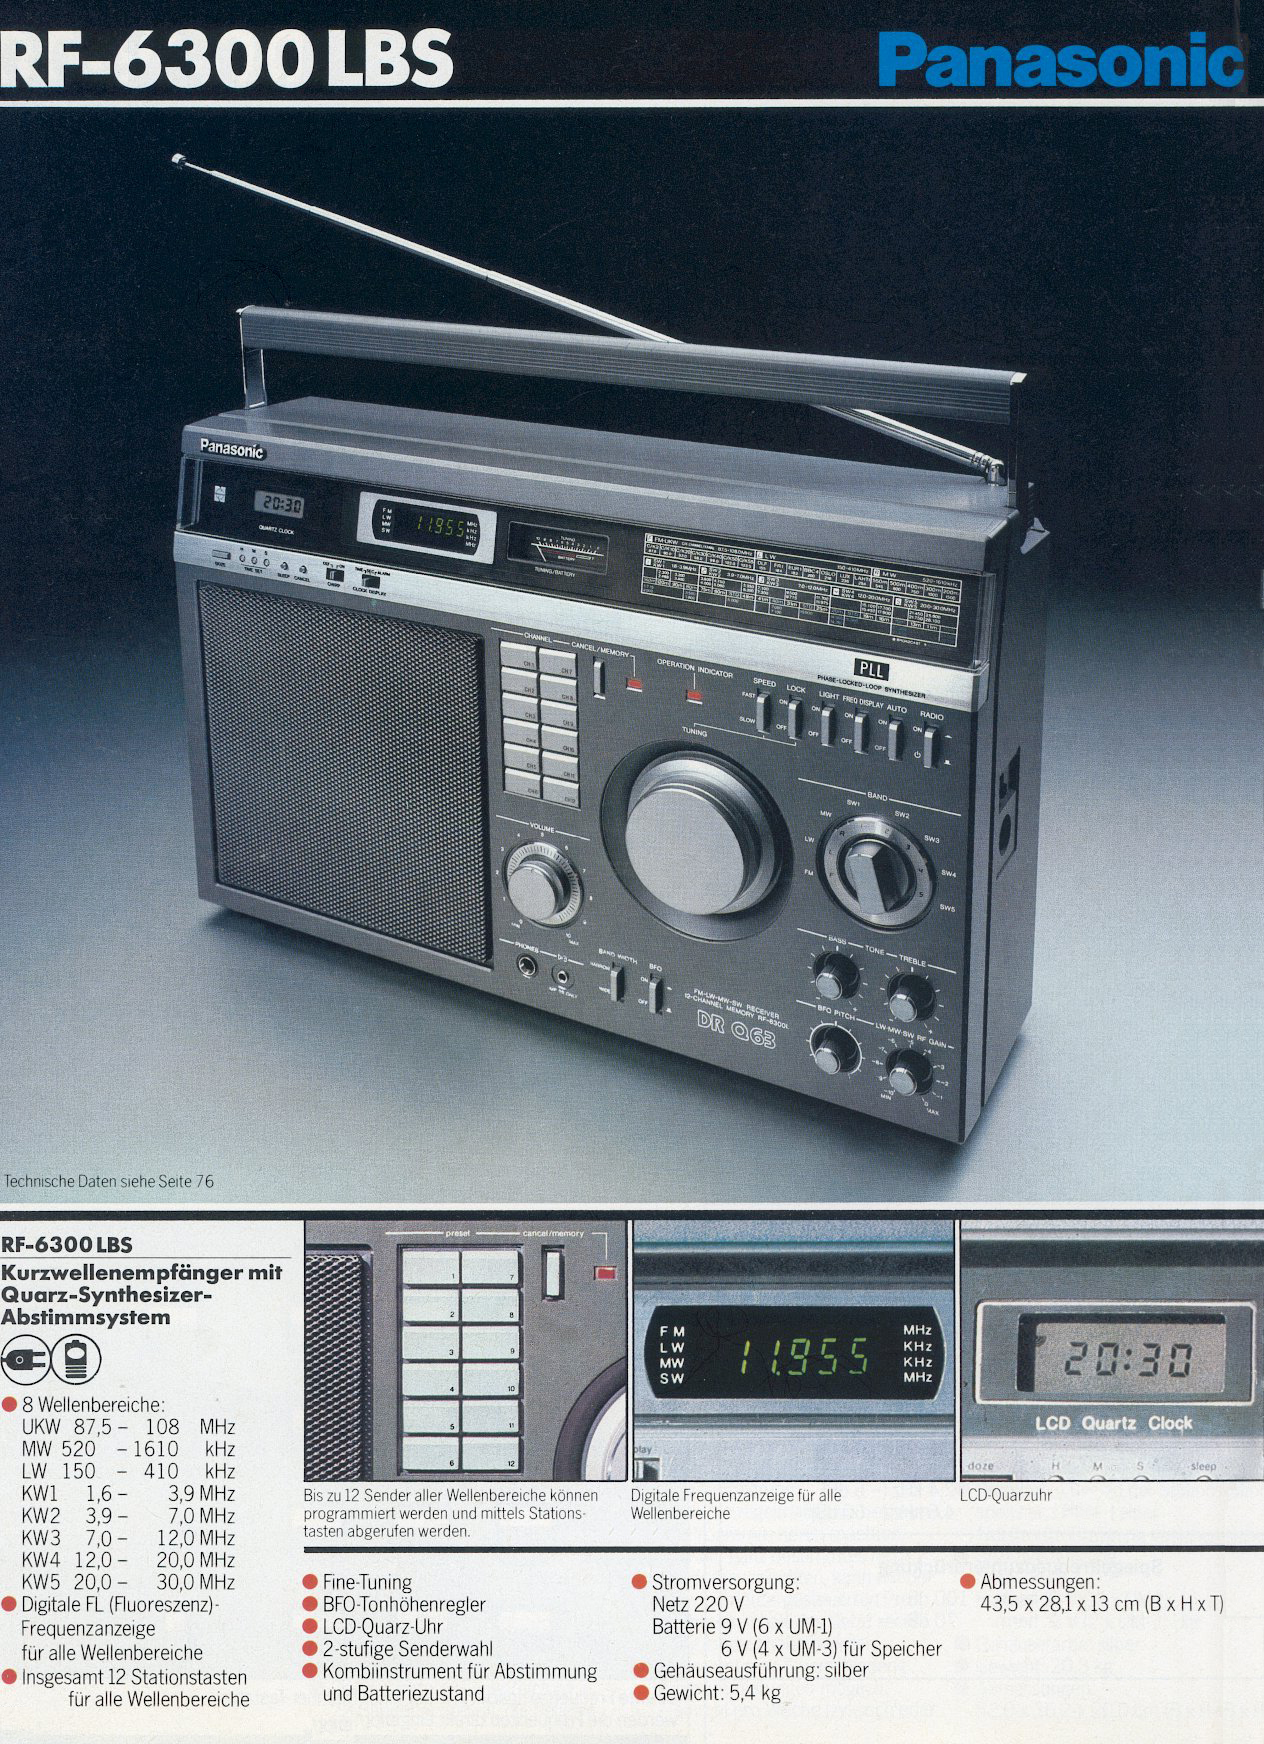 Panasonic RF-6300 LBS-Prospekt-1981.jpg